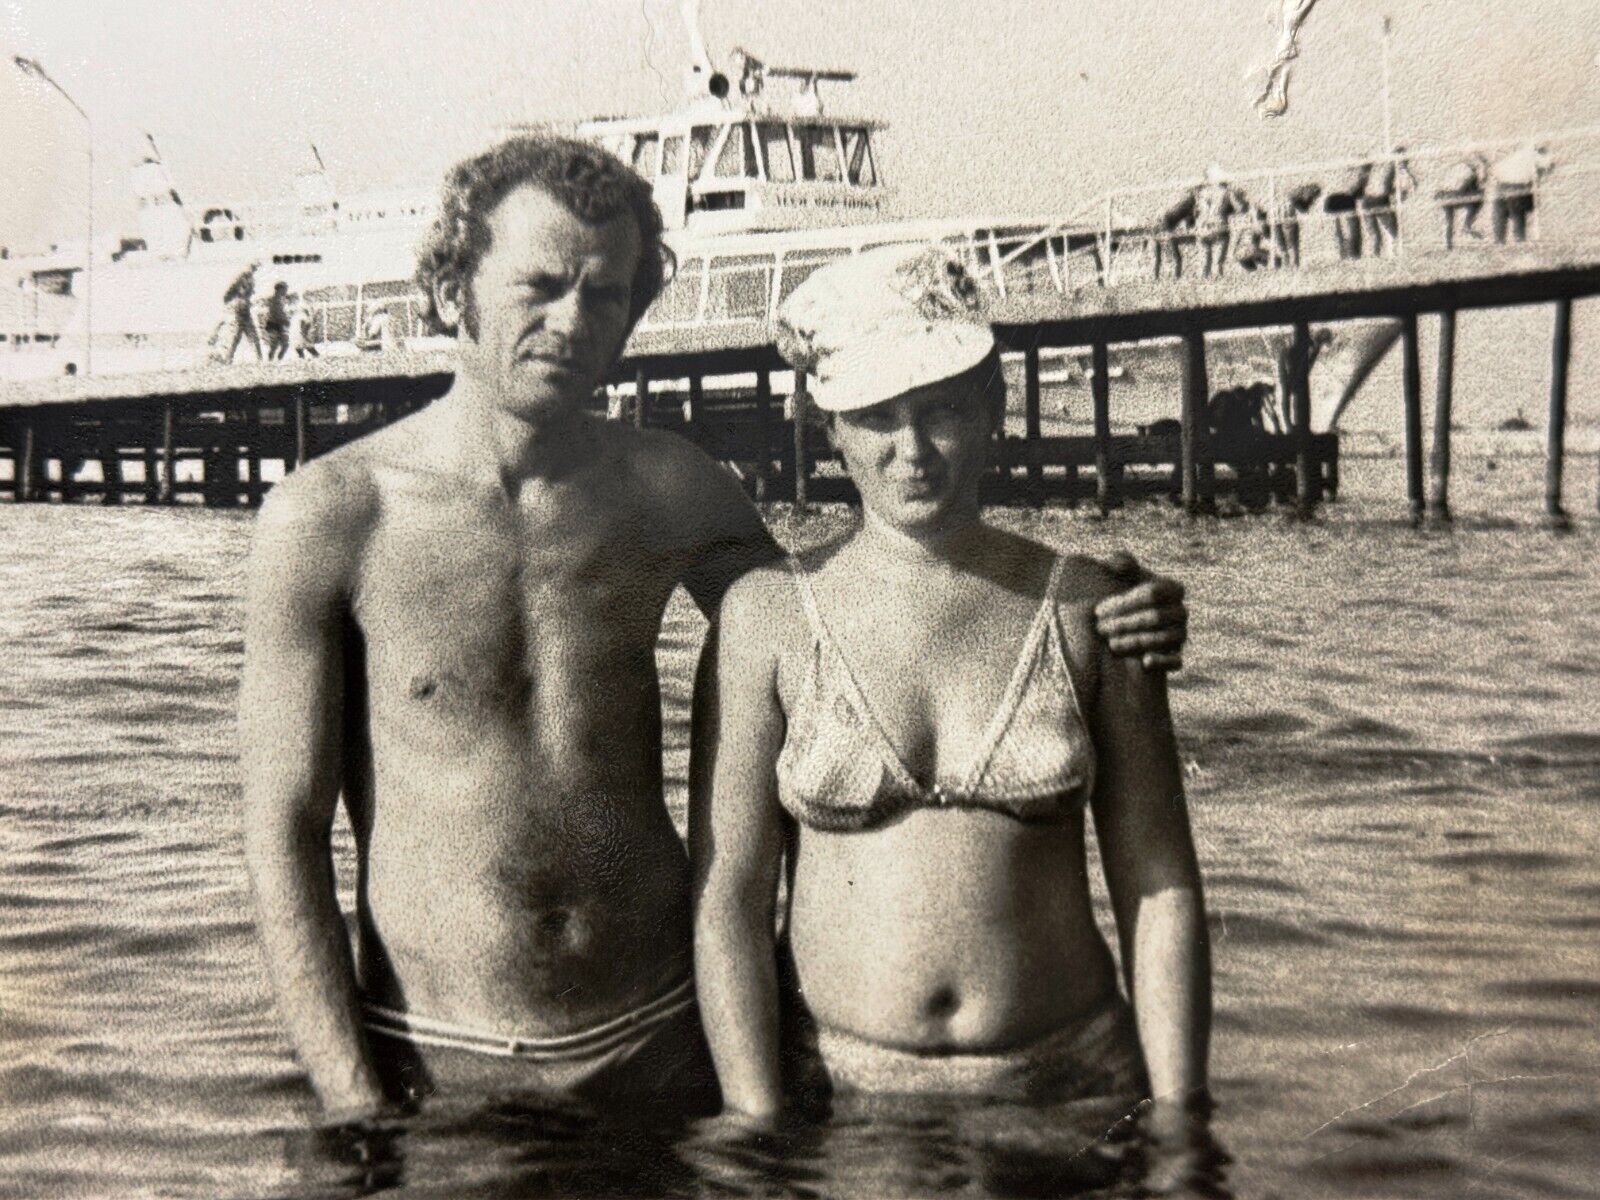 1981 Shirtless Handsome Man Bulge Trunks Woman Bikini Gay int Vintage Photo